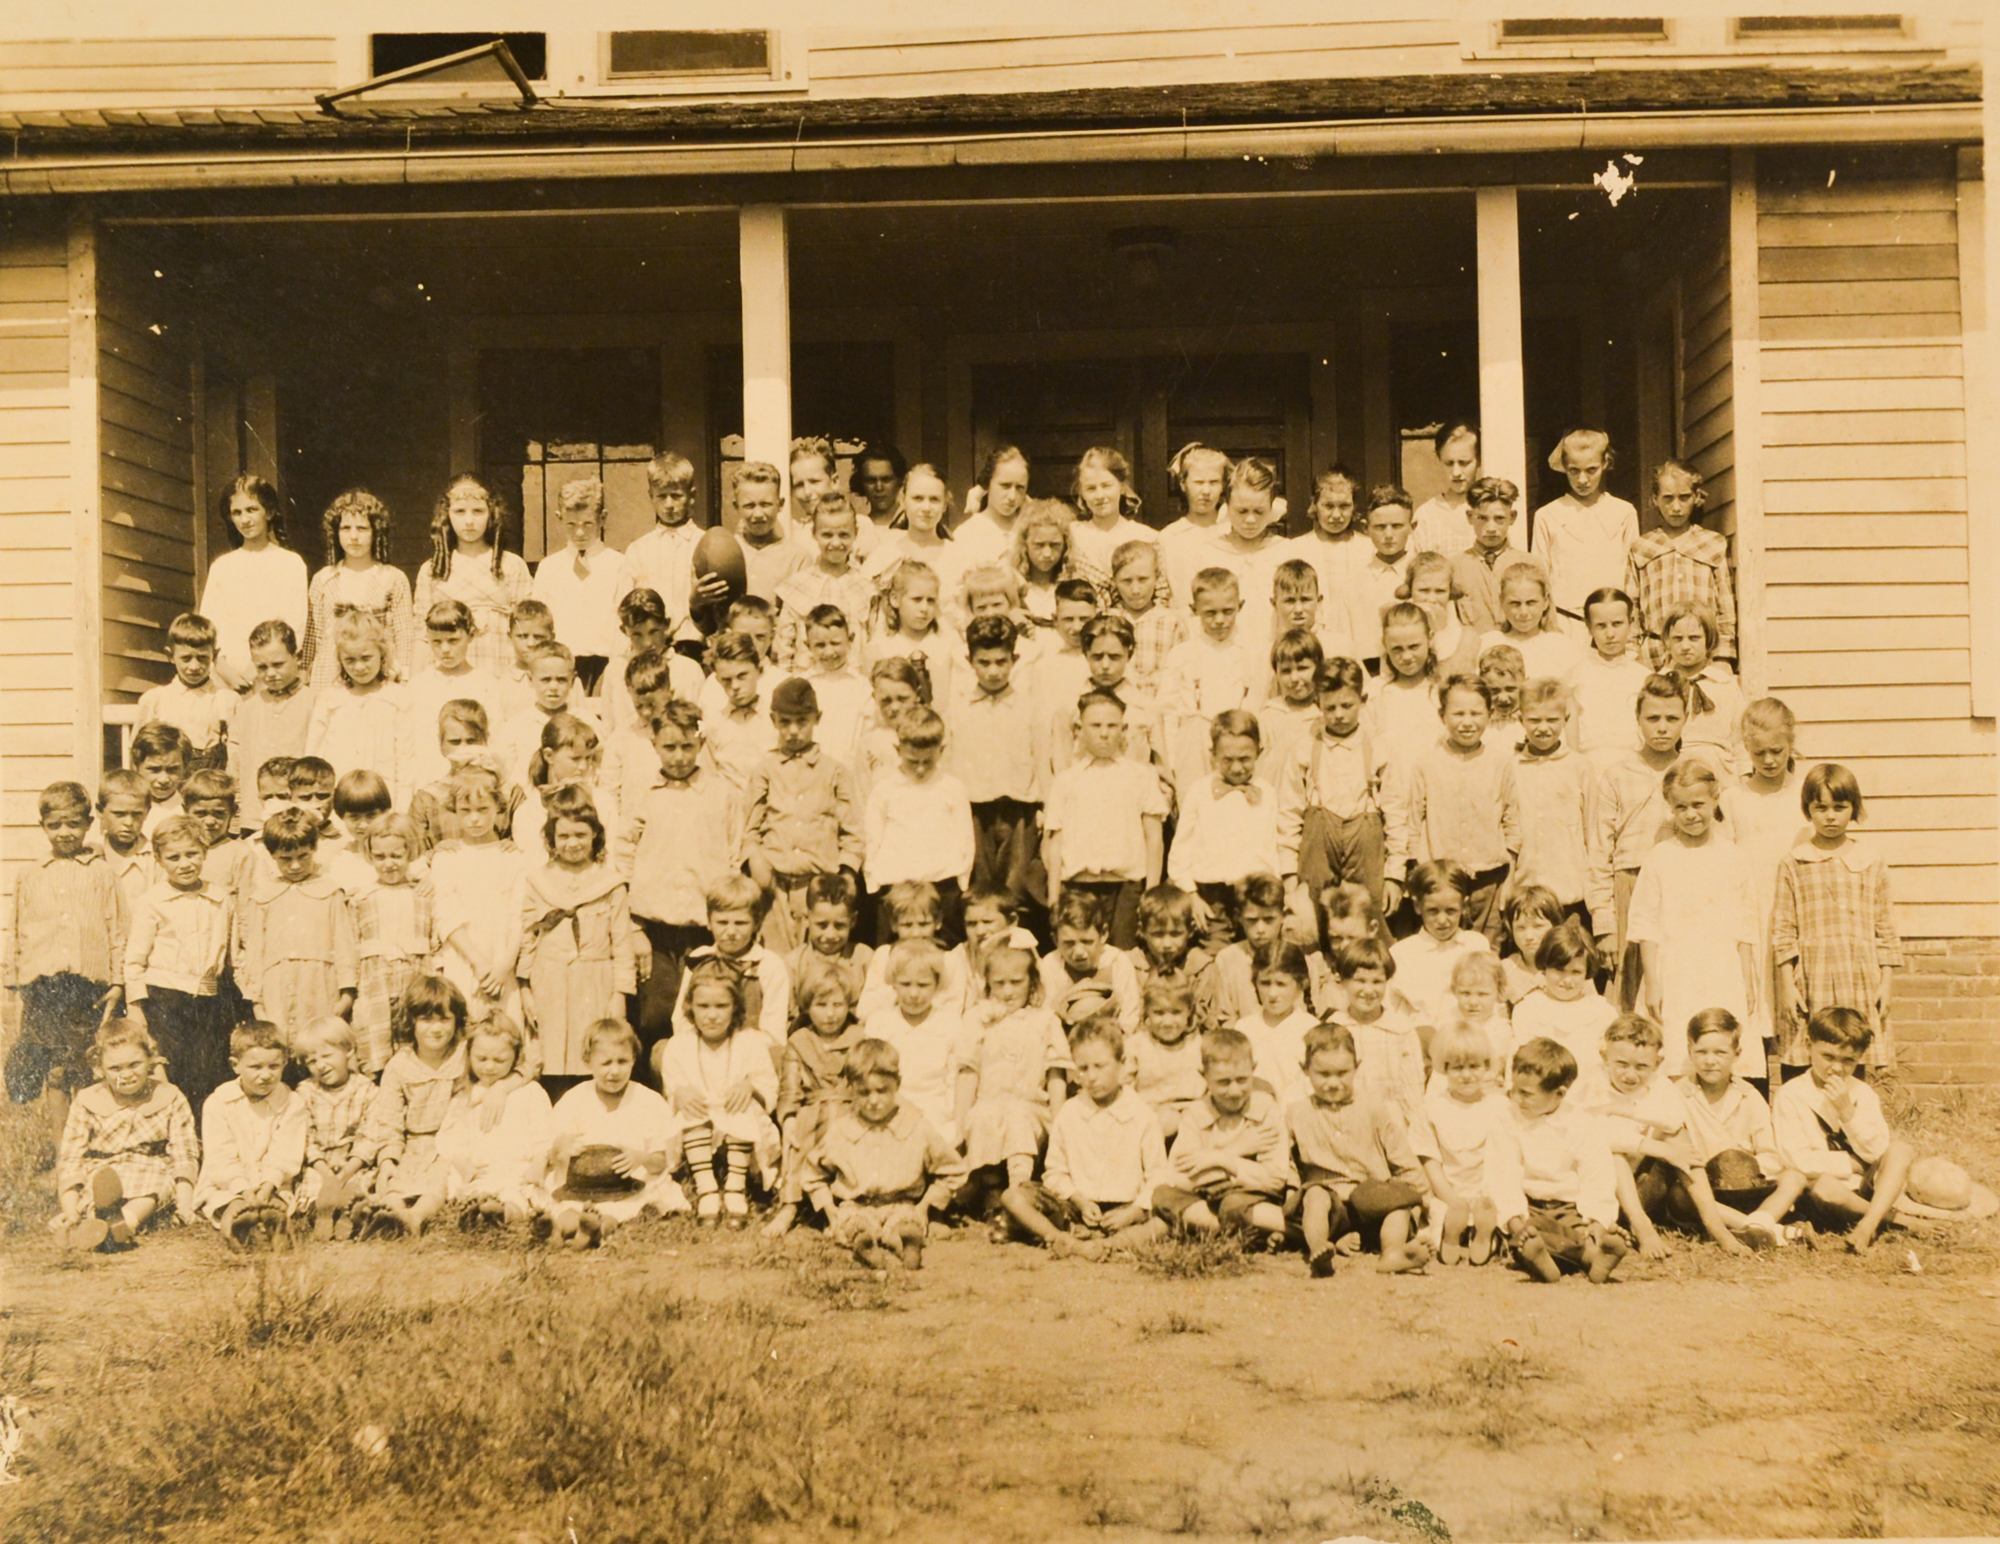 WINNSBORO TEXTILE MILL SCHOOL CA. 1920 - ENLARGEMENT